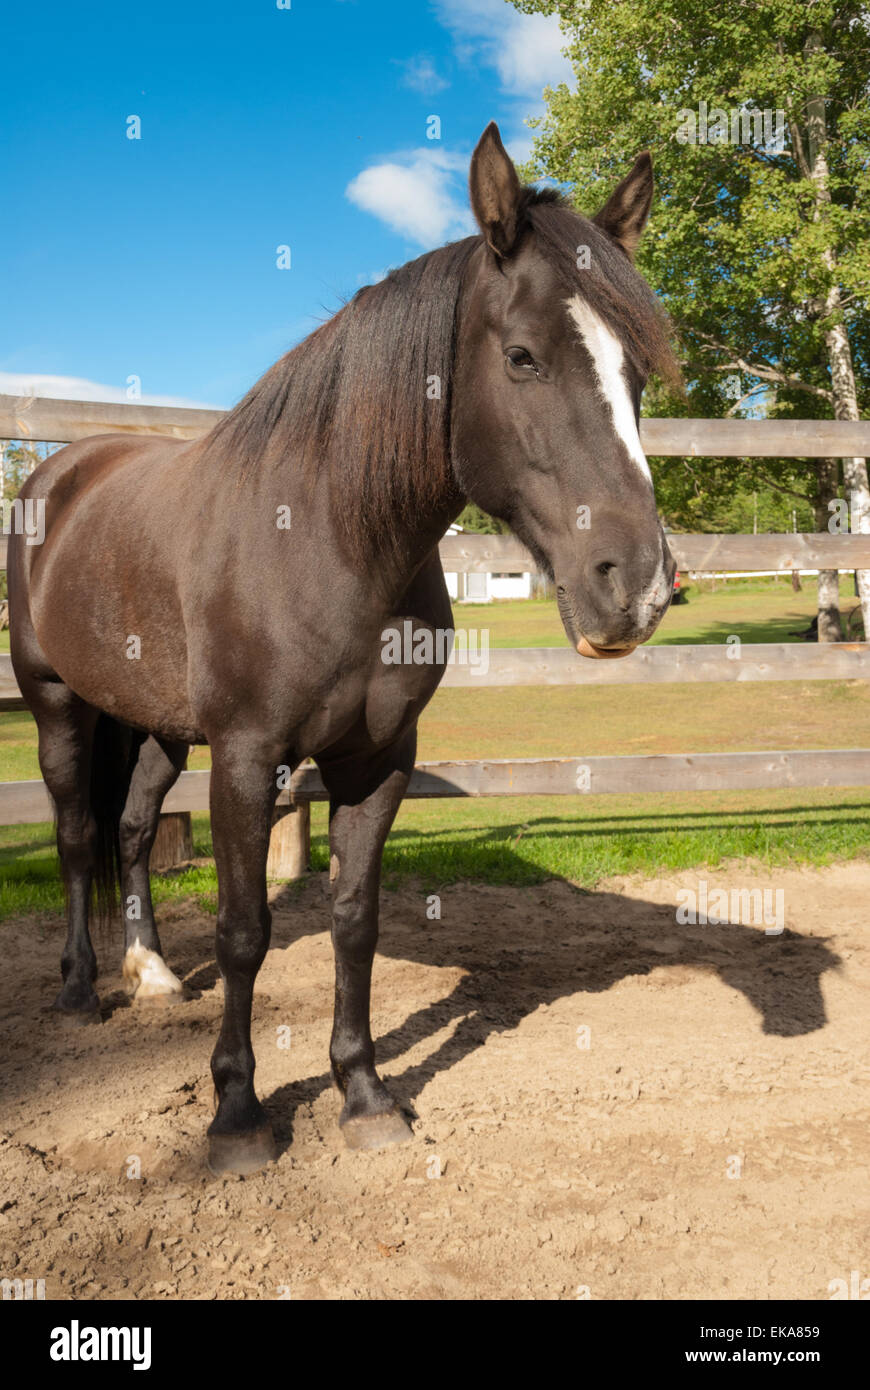 A Canadian horse, Equus ferus caballus, standing in a farmyard corral Stock Photo